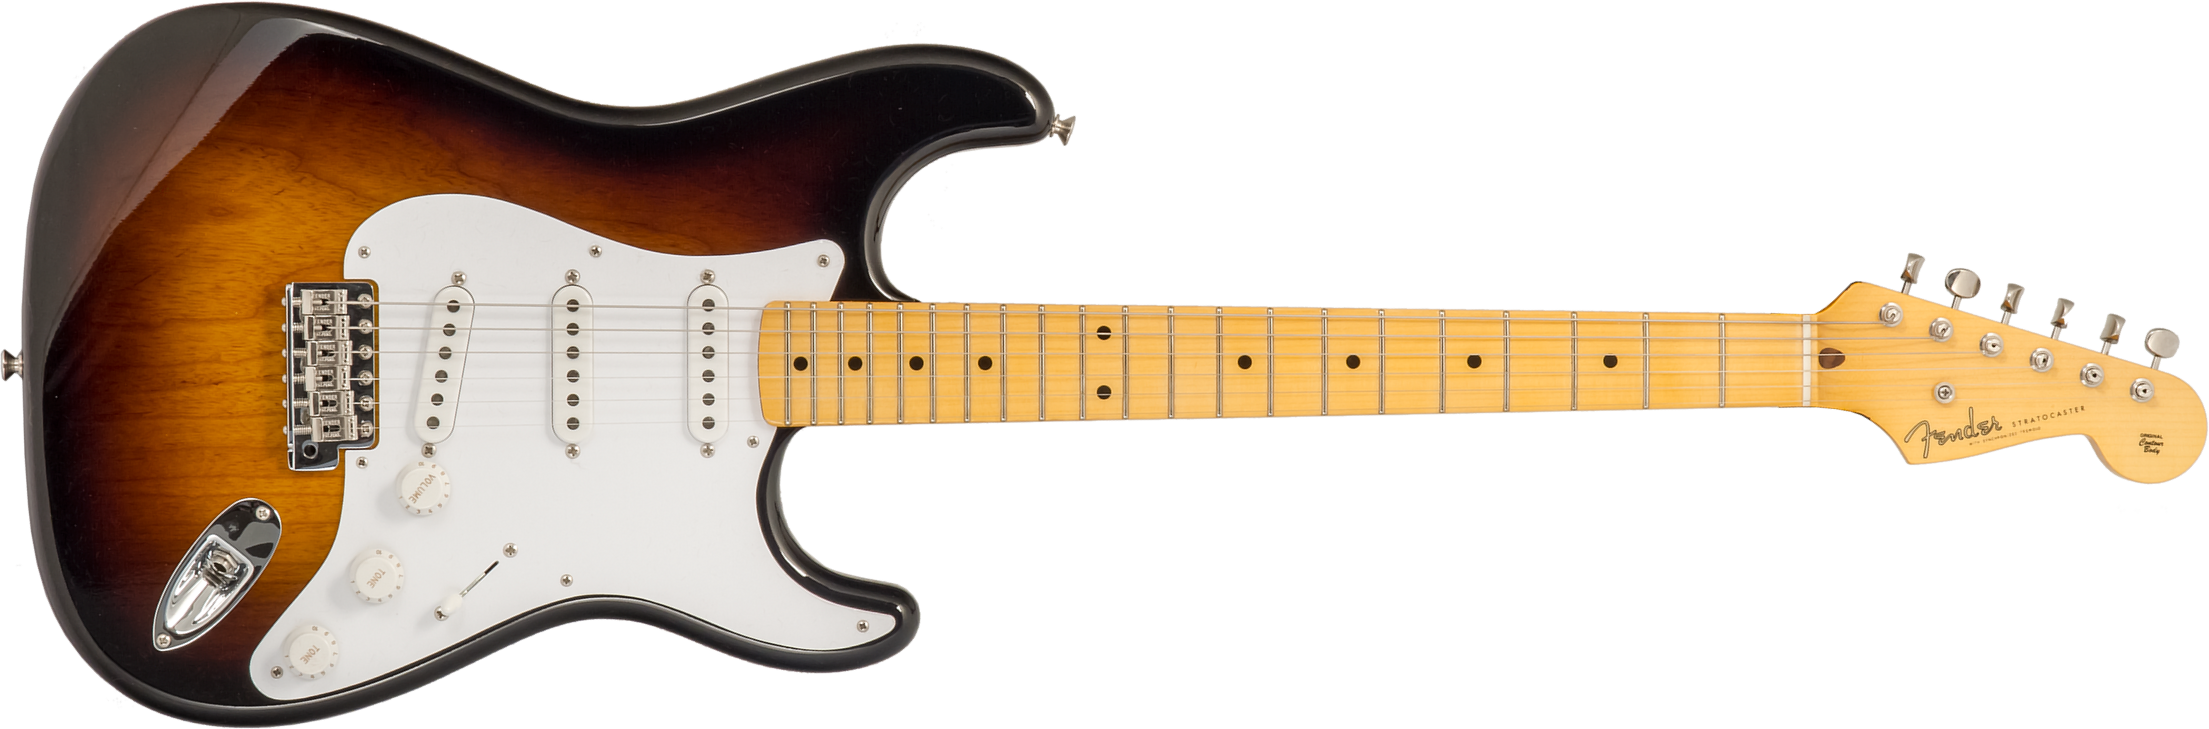 Fender Custom Shop Strat 1954 70th Anniv. #xn4611 3s Trem Mn - Time Capsule Wide Fade 2-color Sunburst - Elektrische gitaar in Str-vorm - Main picture